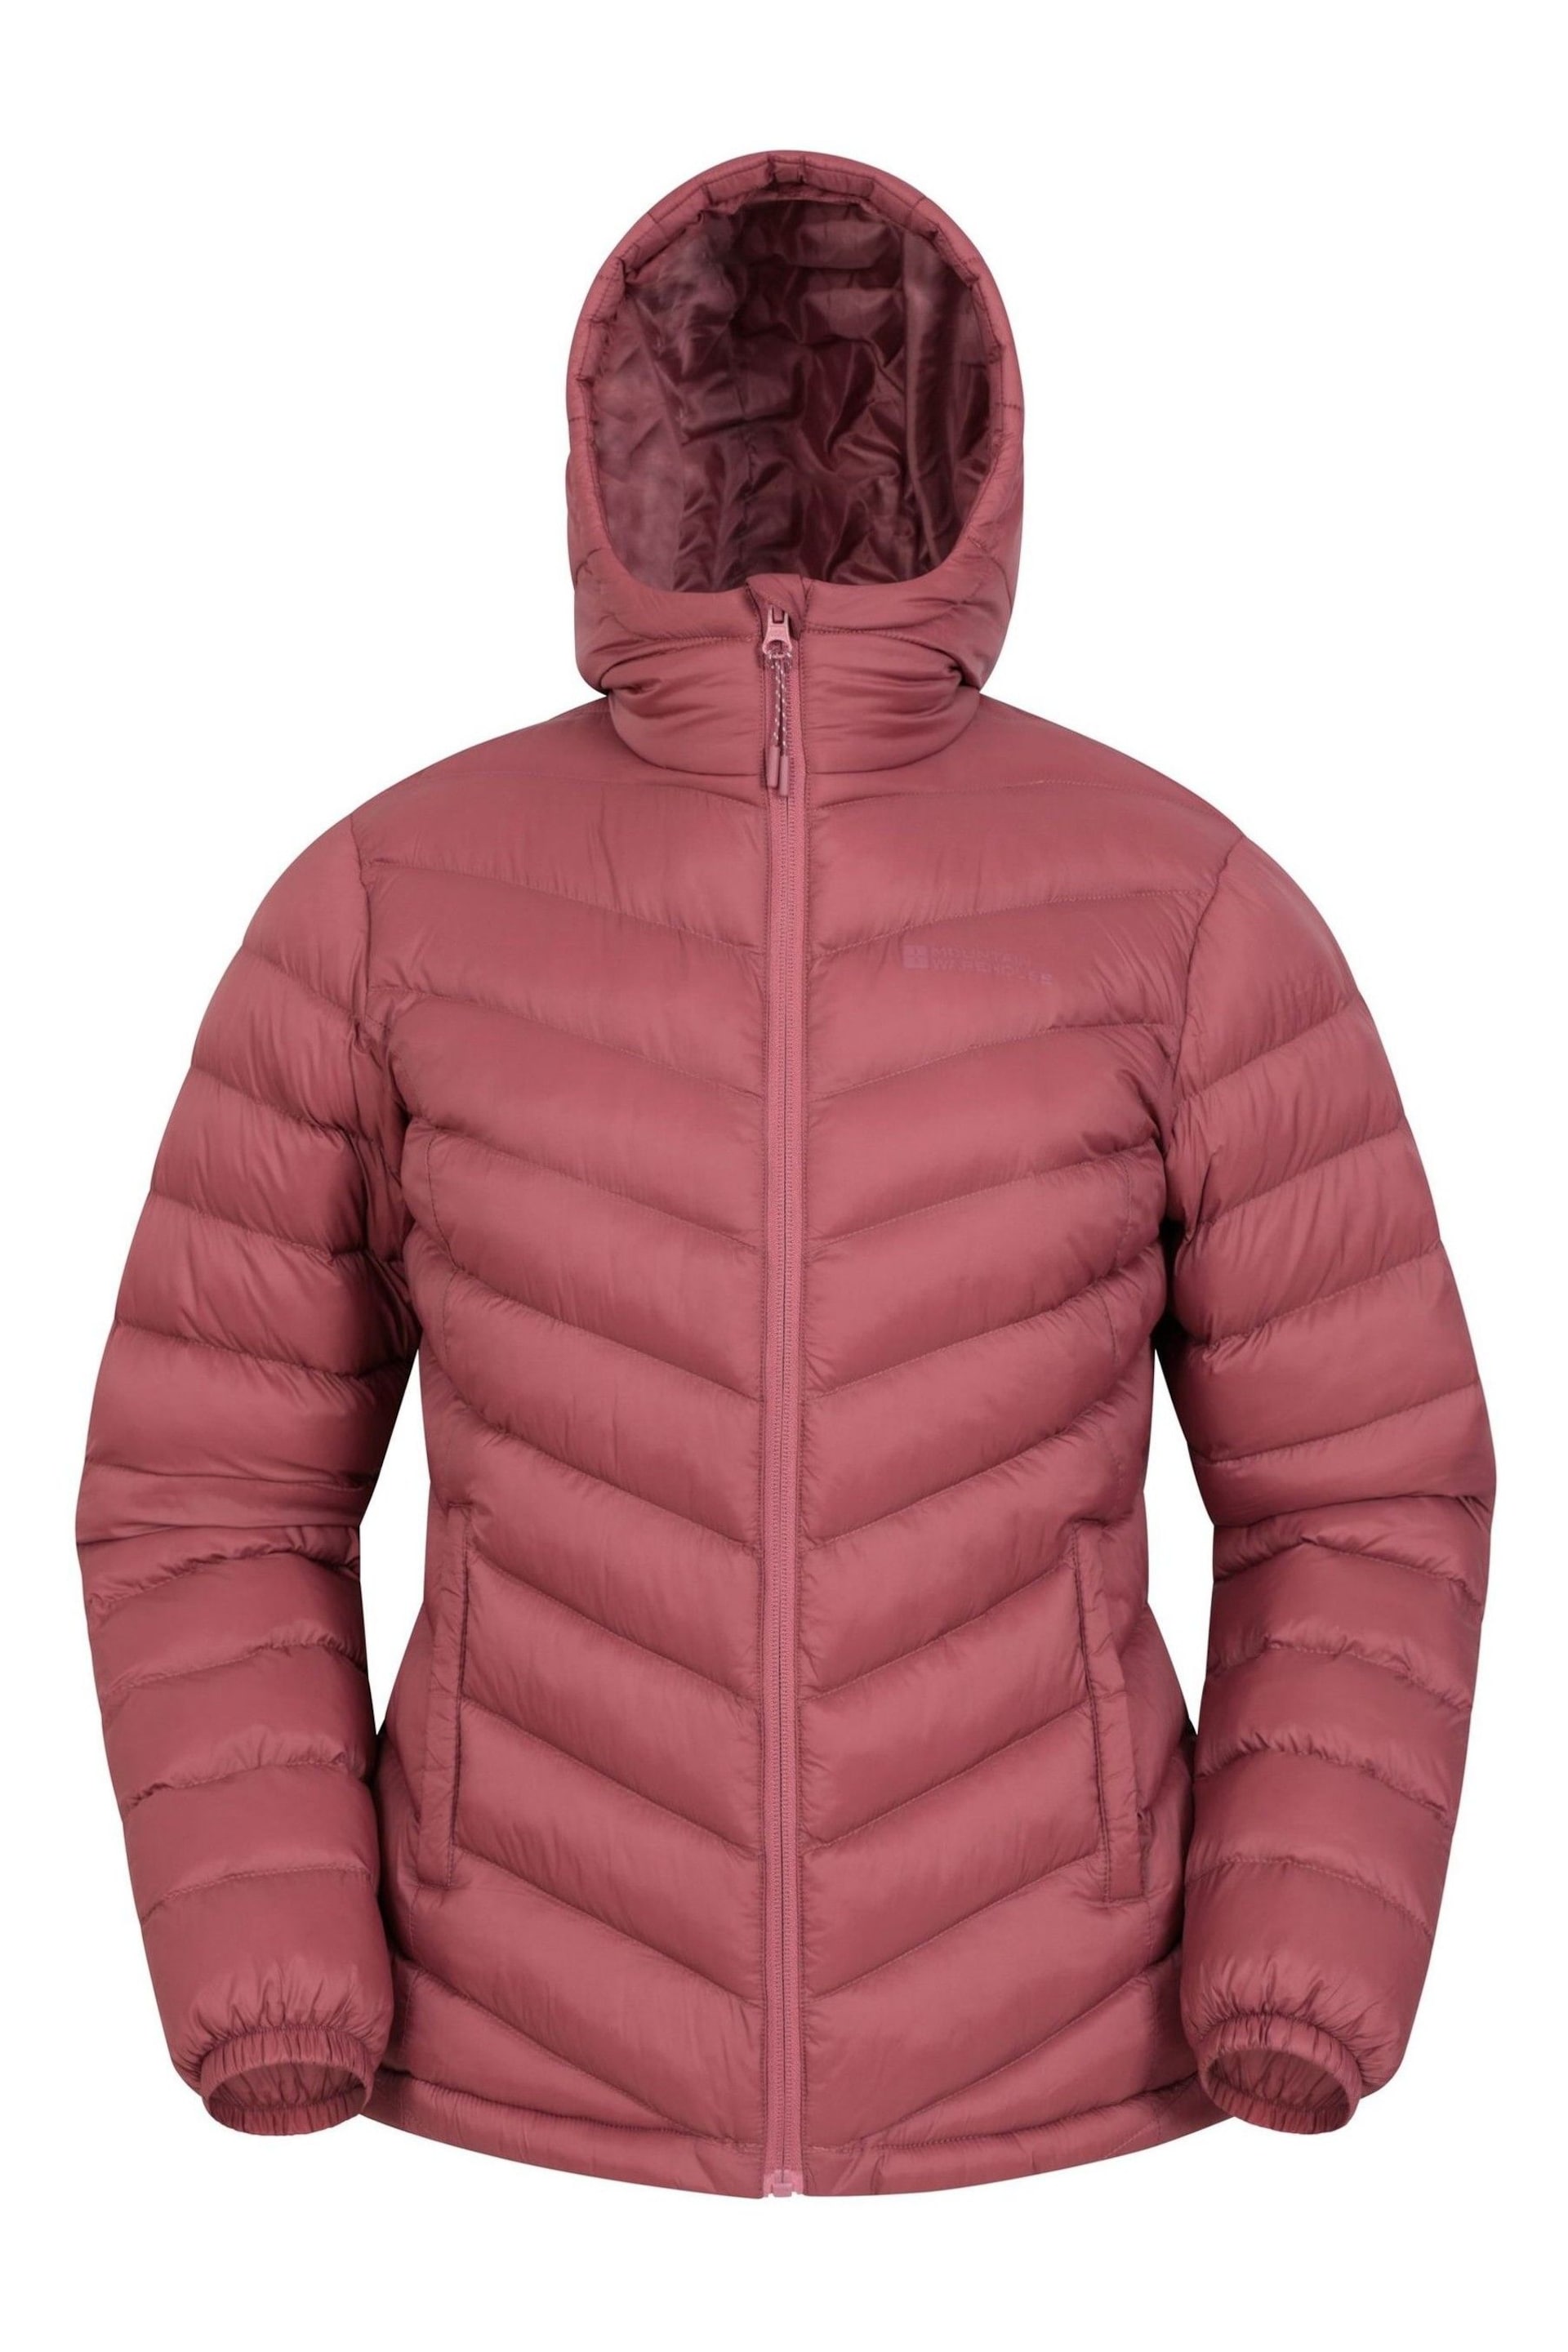 Mountain Warehouse Pink Womens Seasons Water Resistant Padded Jacket - Image 5 of 9